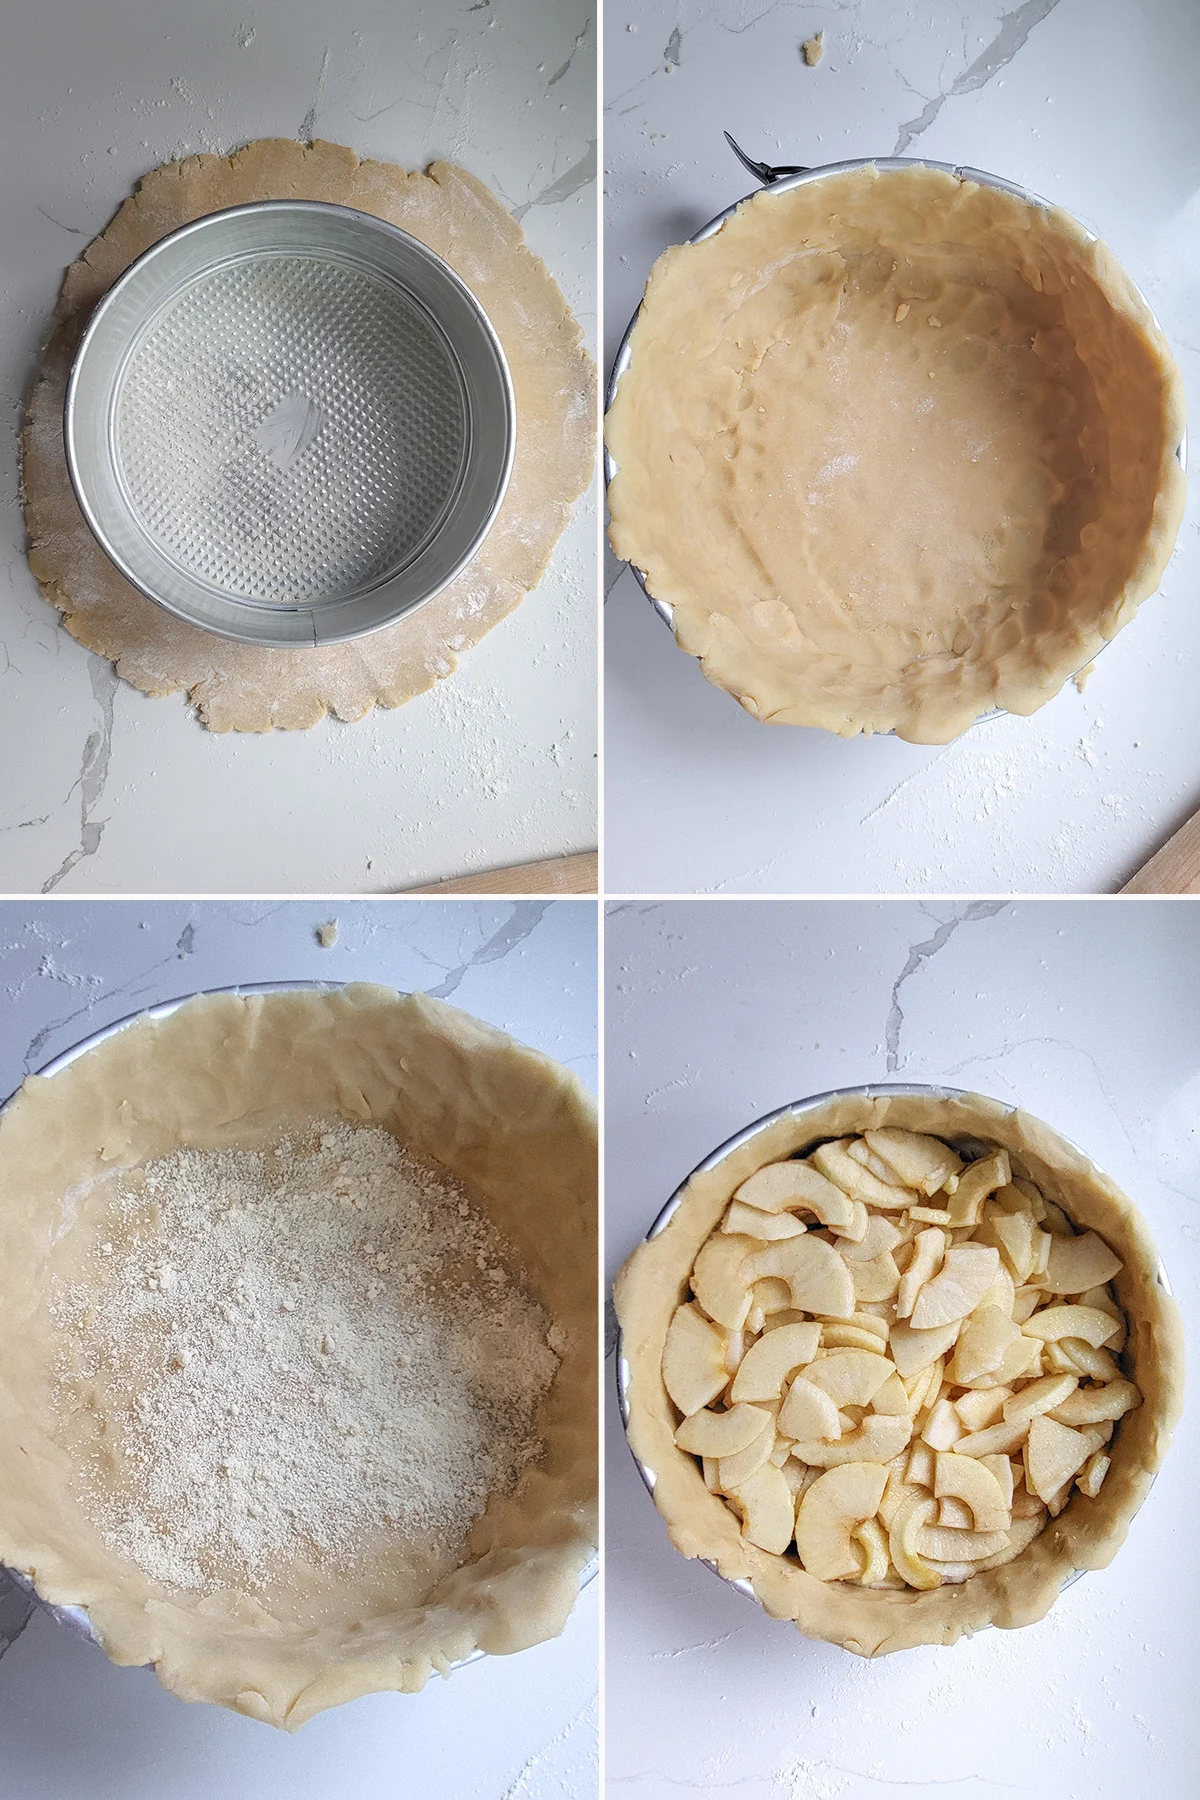 a springform pan filled with tart dough and apples.